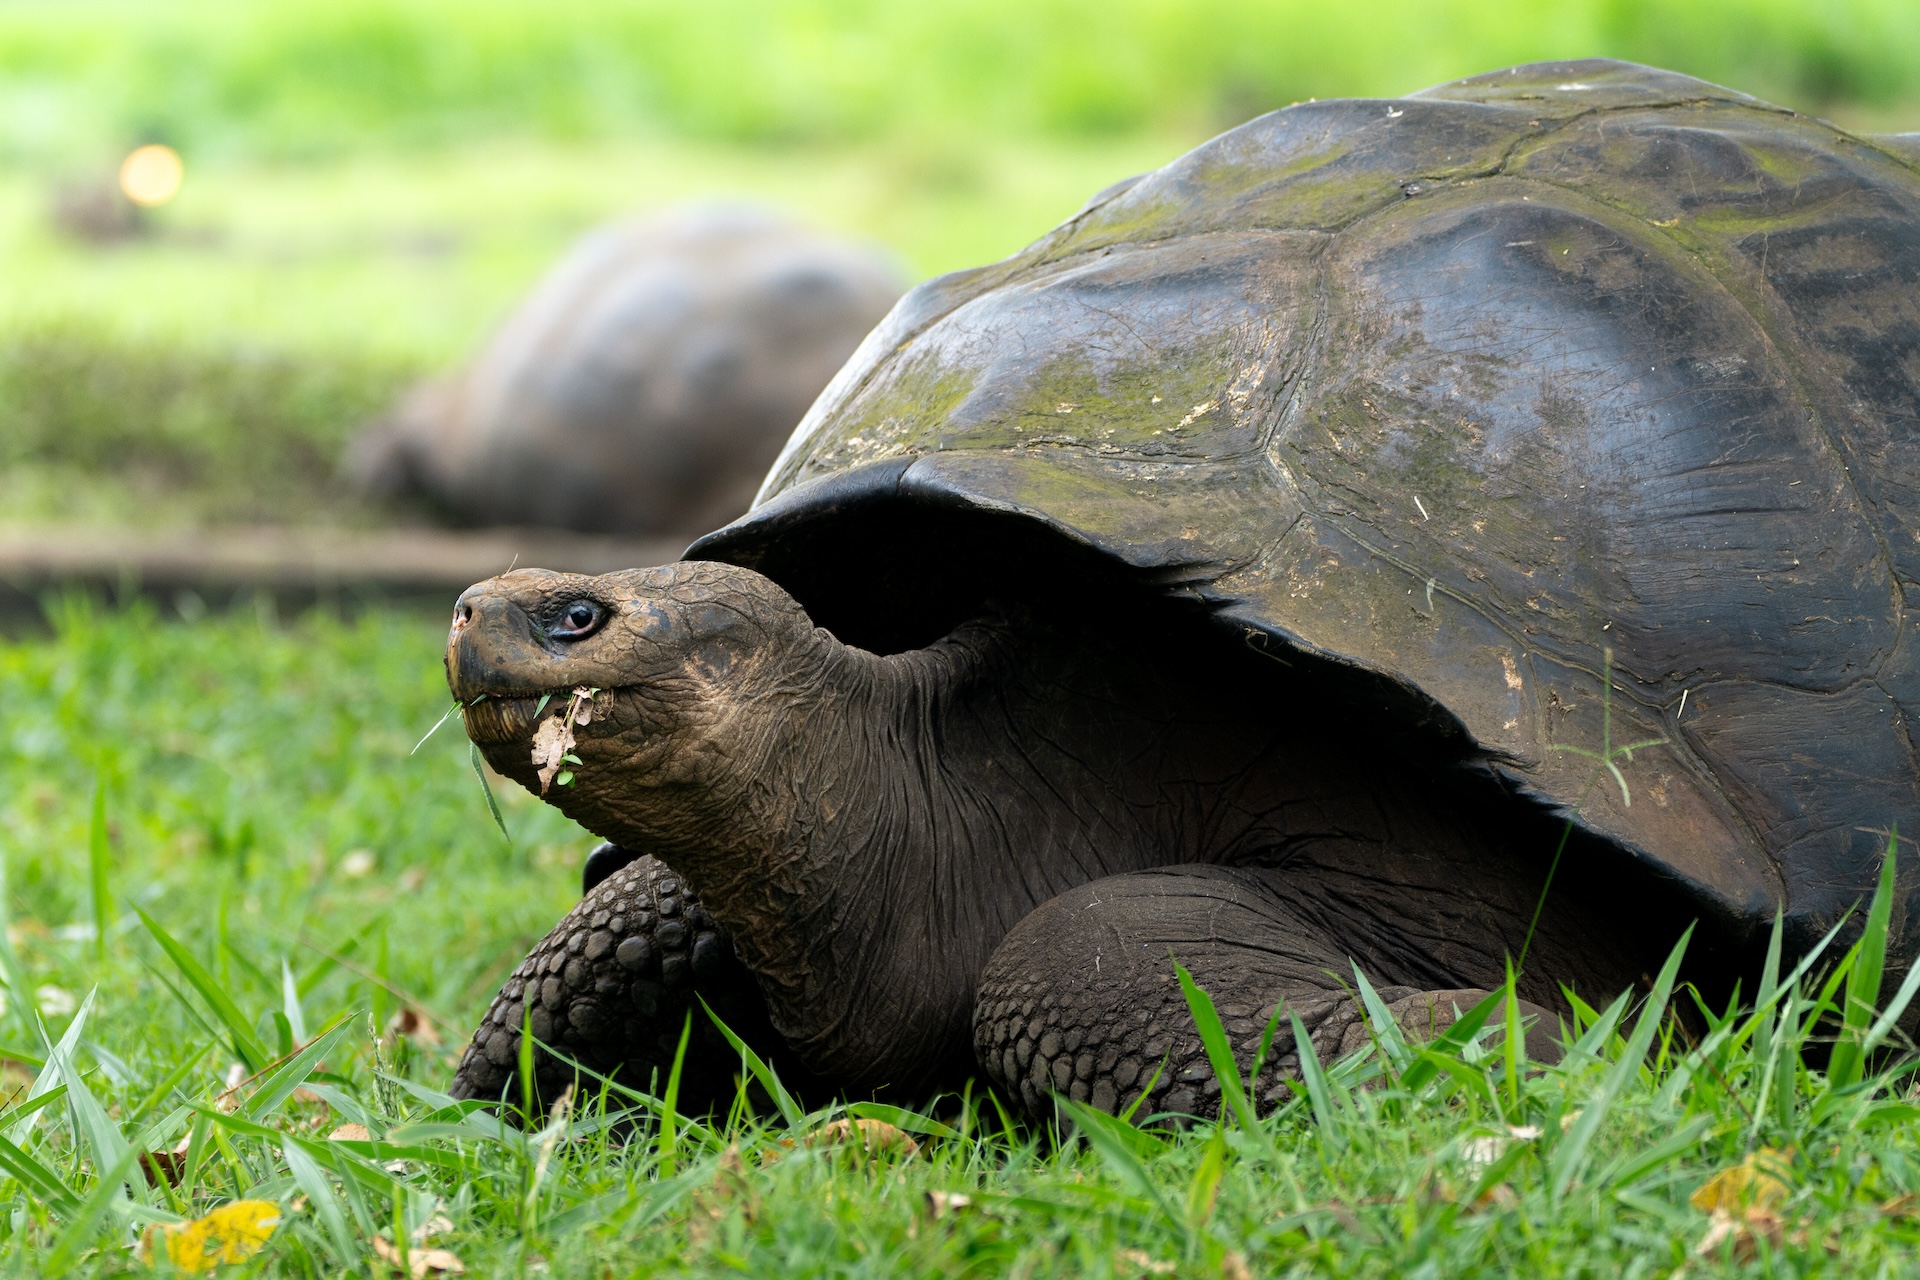 Galapagos Giant Tortoise by Rashid Cruz